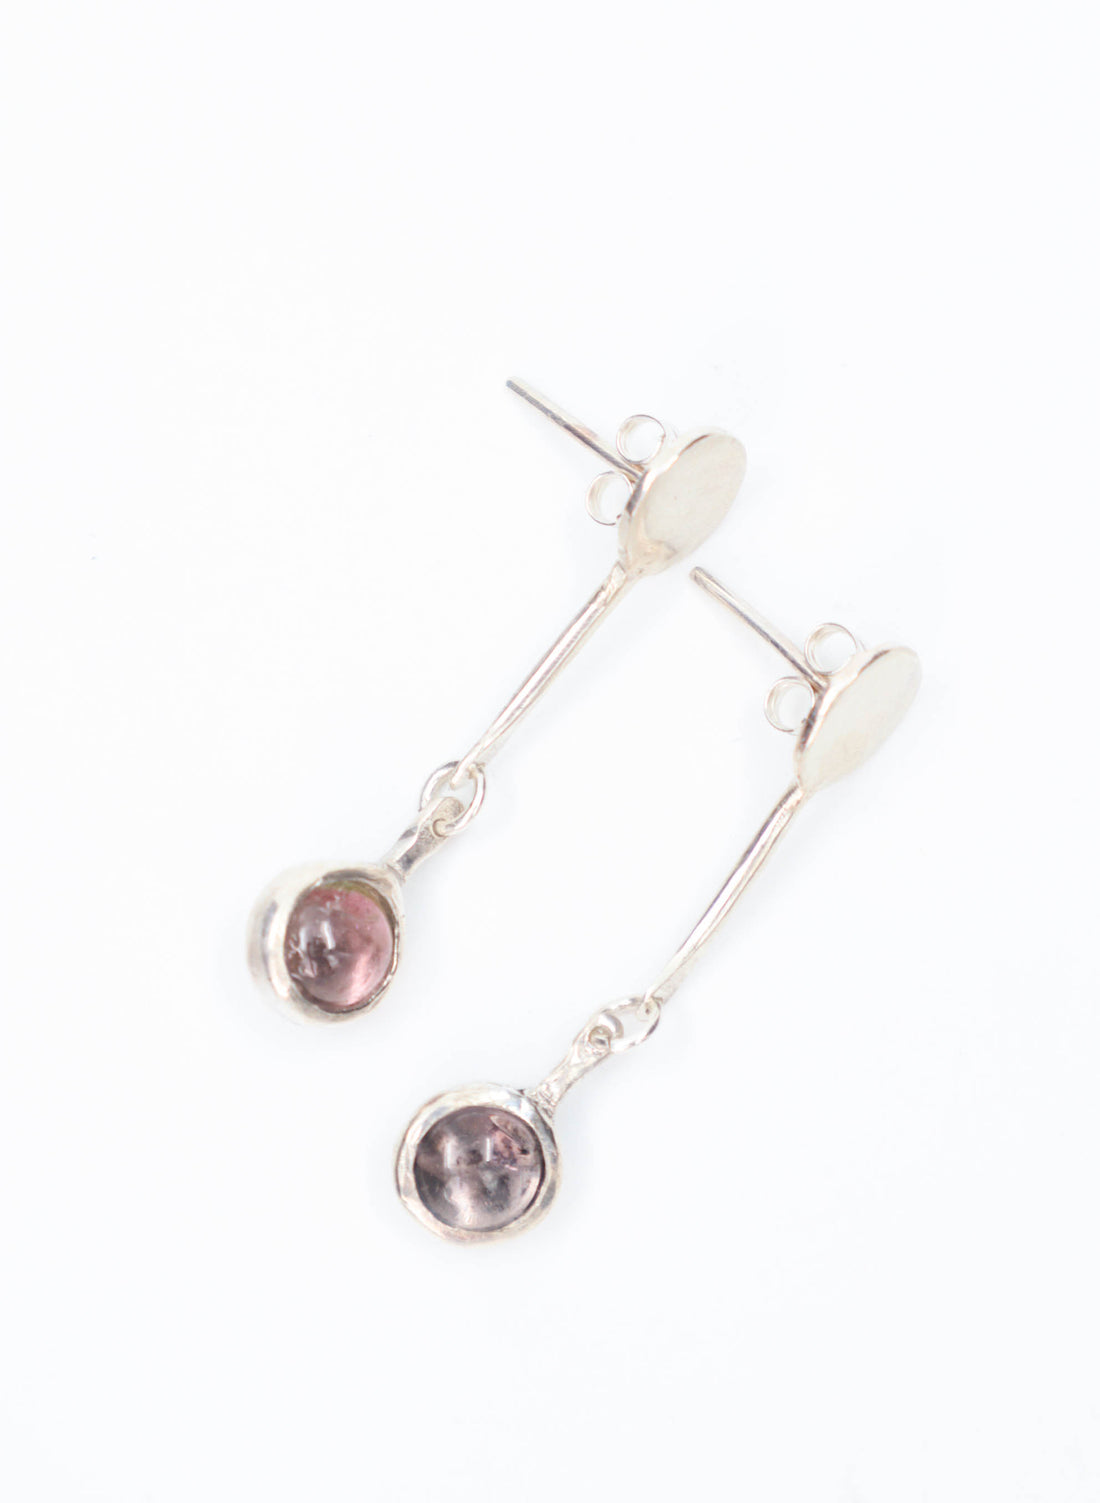 Solar Hoop Earrings - Sterling Silver and Dusty Pink Tourmaline